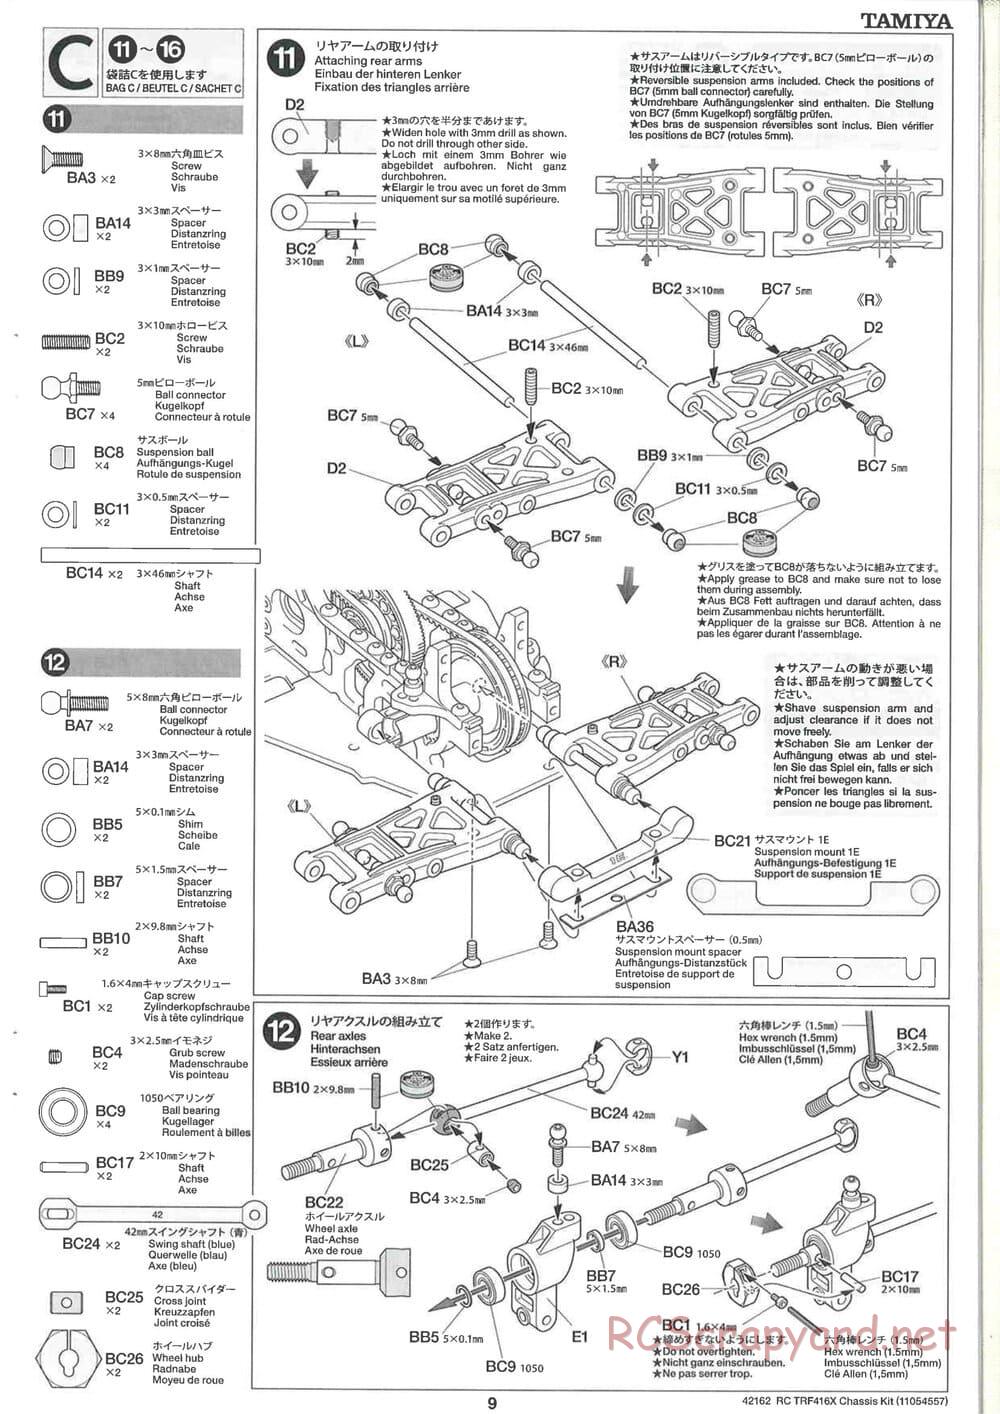 Tamiya - TRF416X Chassis - Manual - Page 9